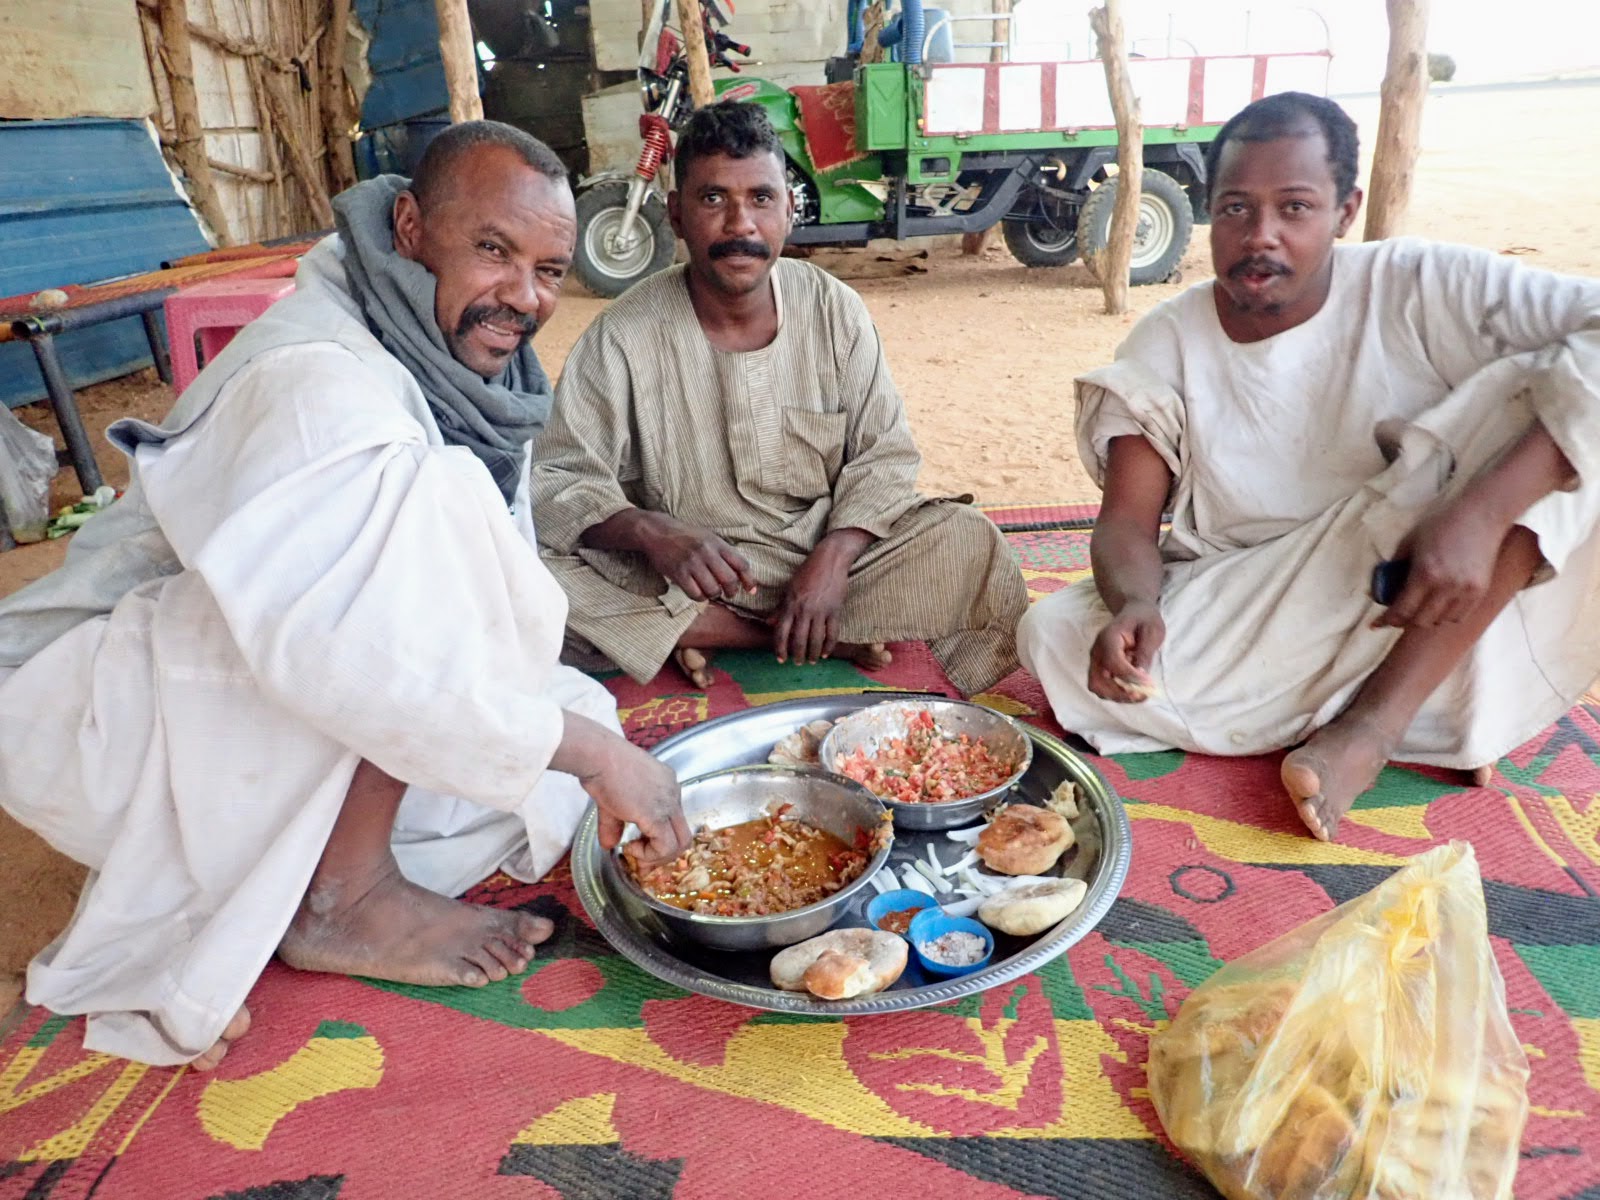 Sudanese men sharing food